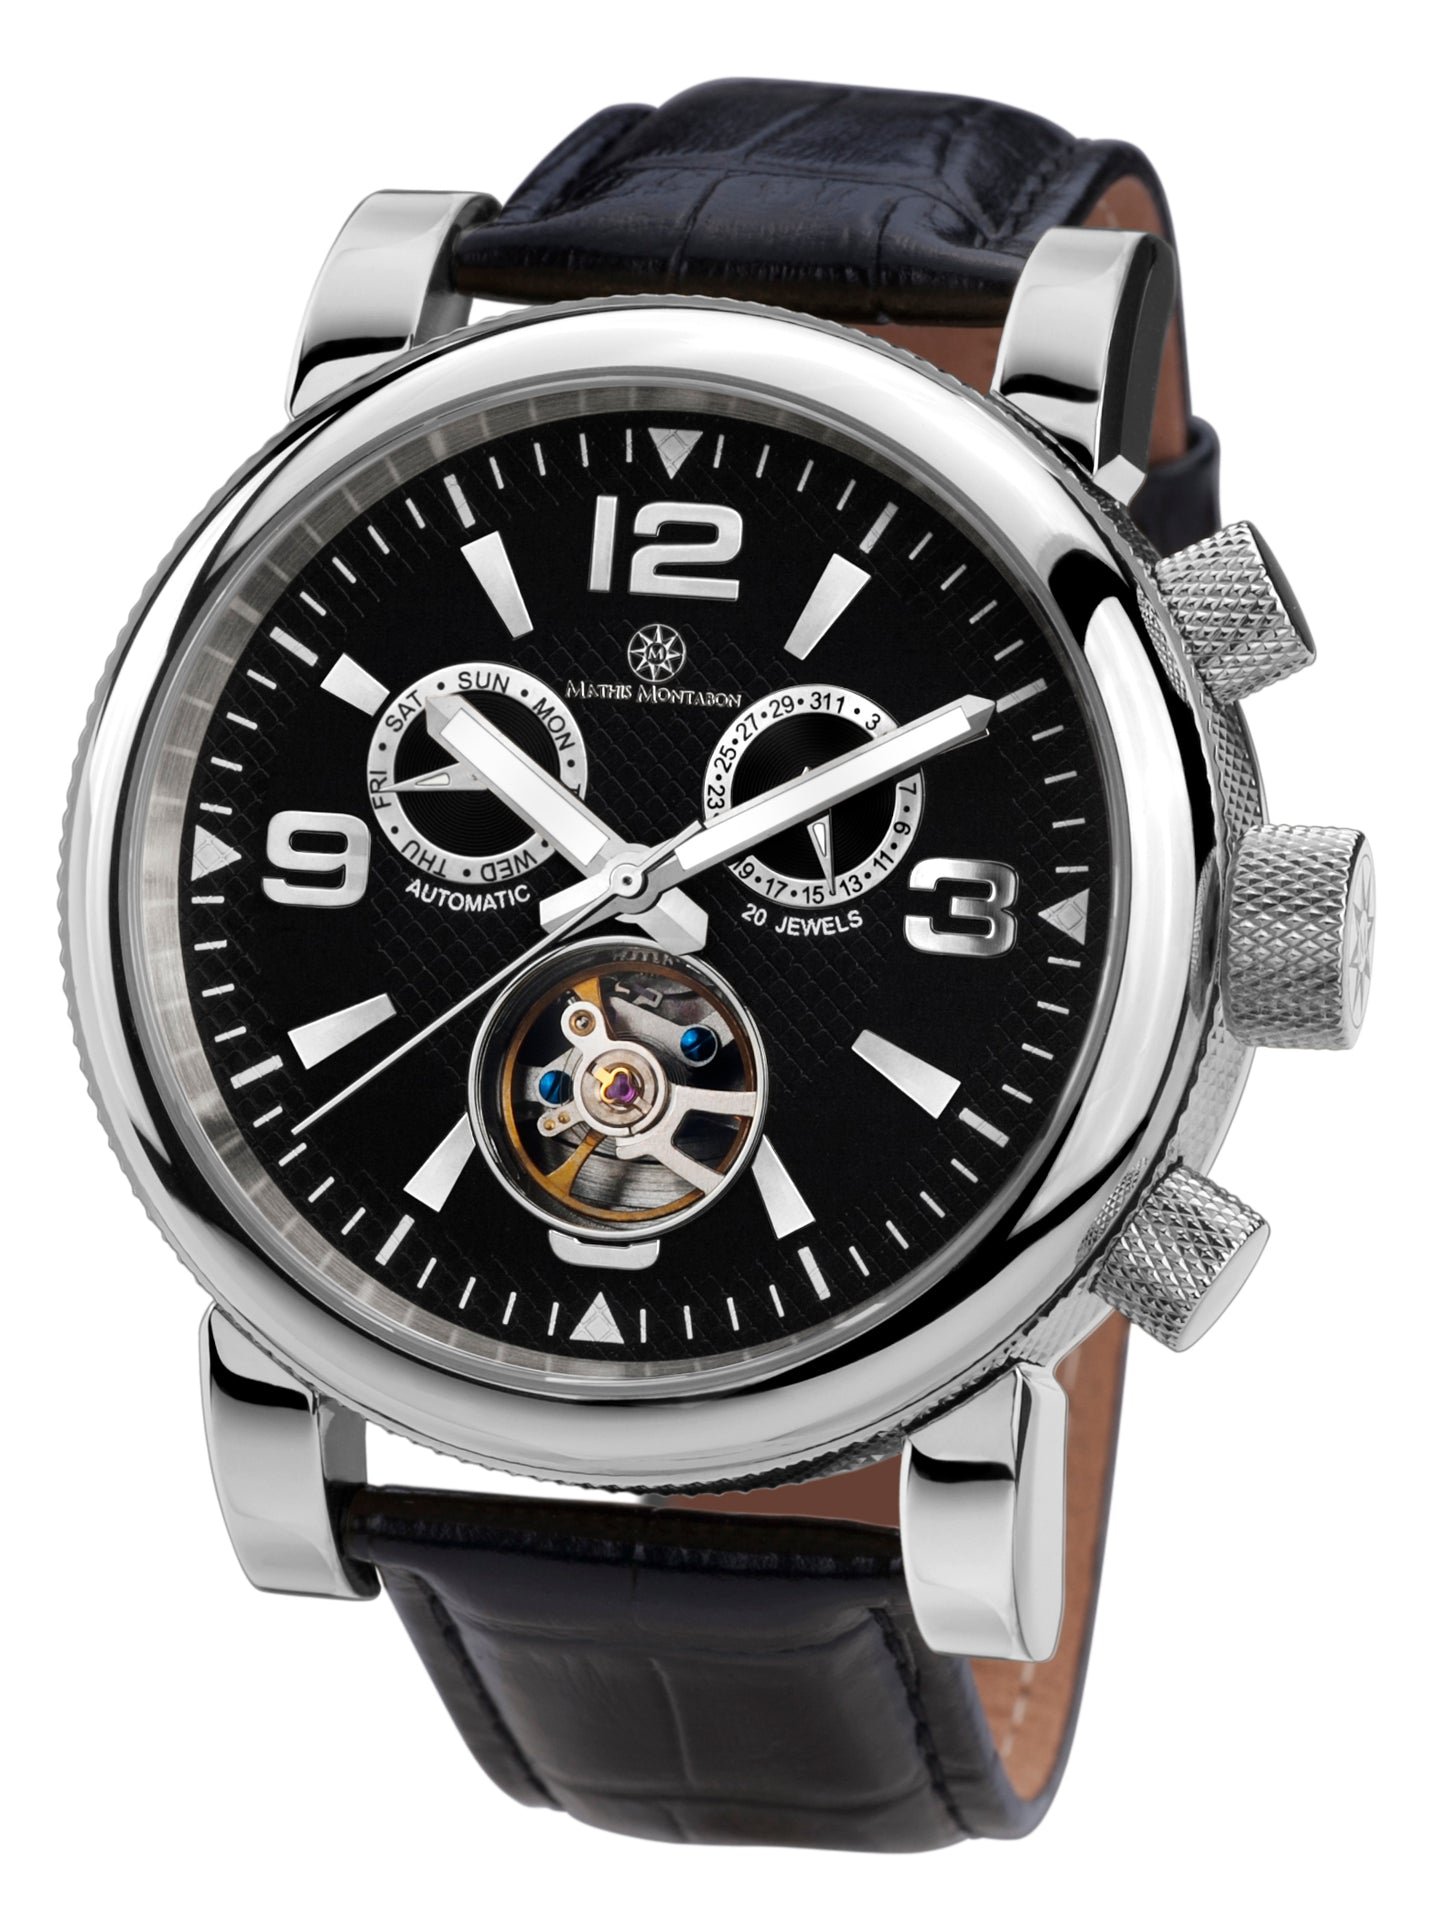 Automatic watches — La Grande — Mathis Montabon — schwarz